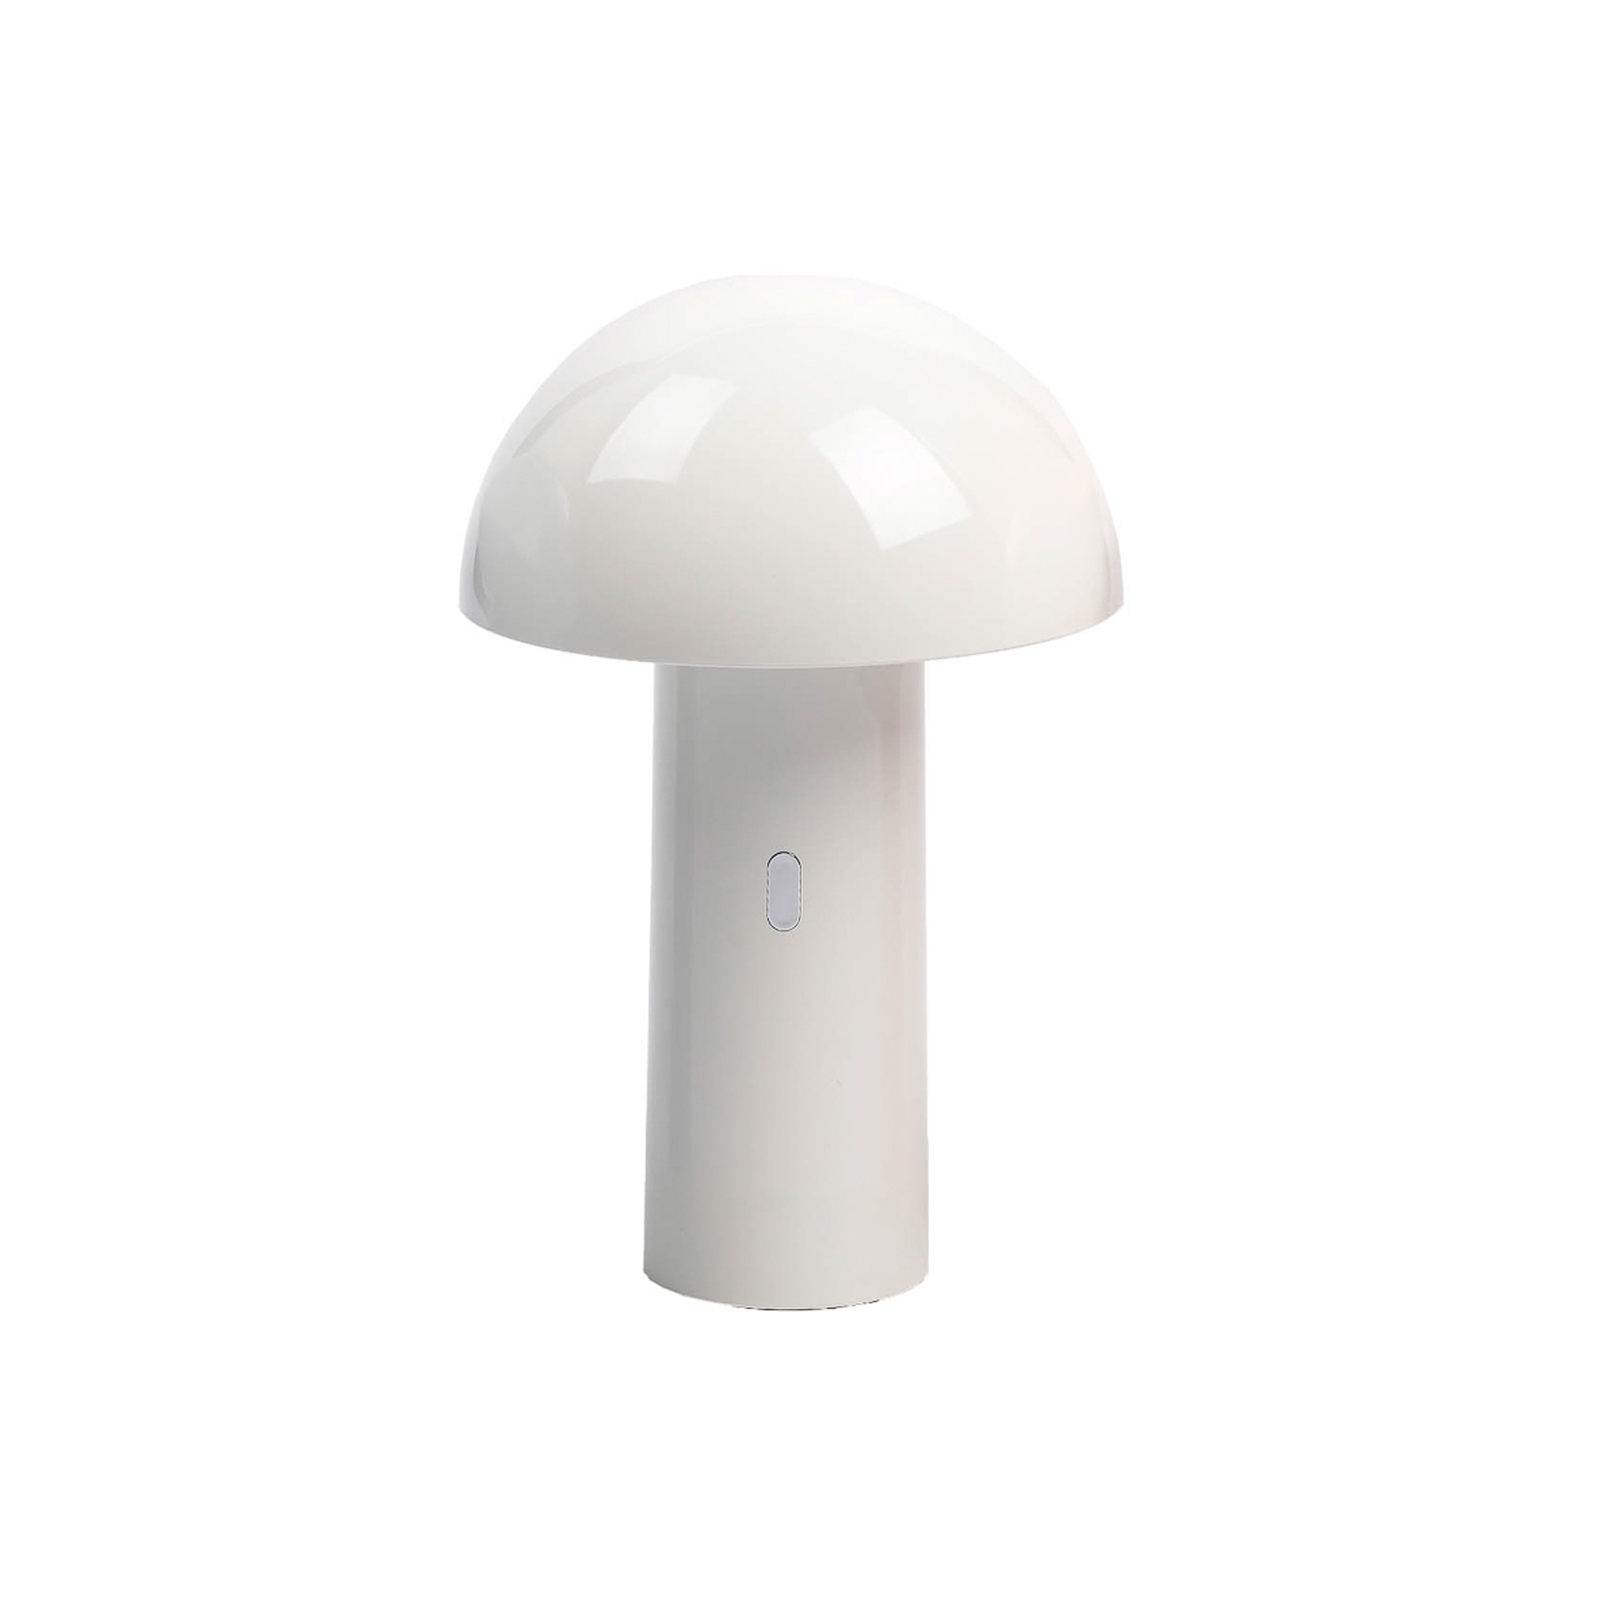 Aluminor Capsule stolná LED lampa, mobilná, biela